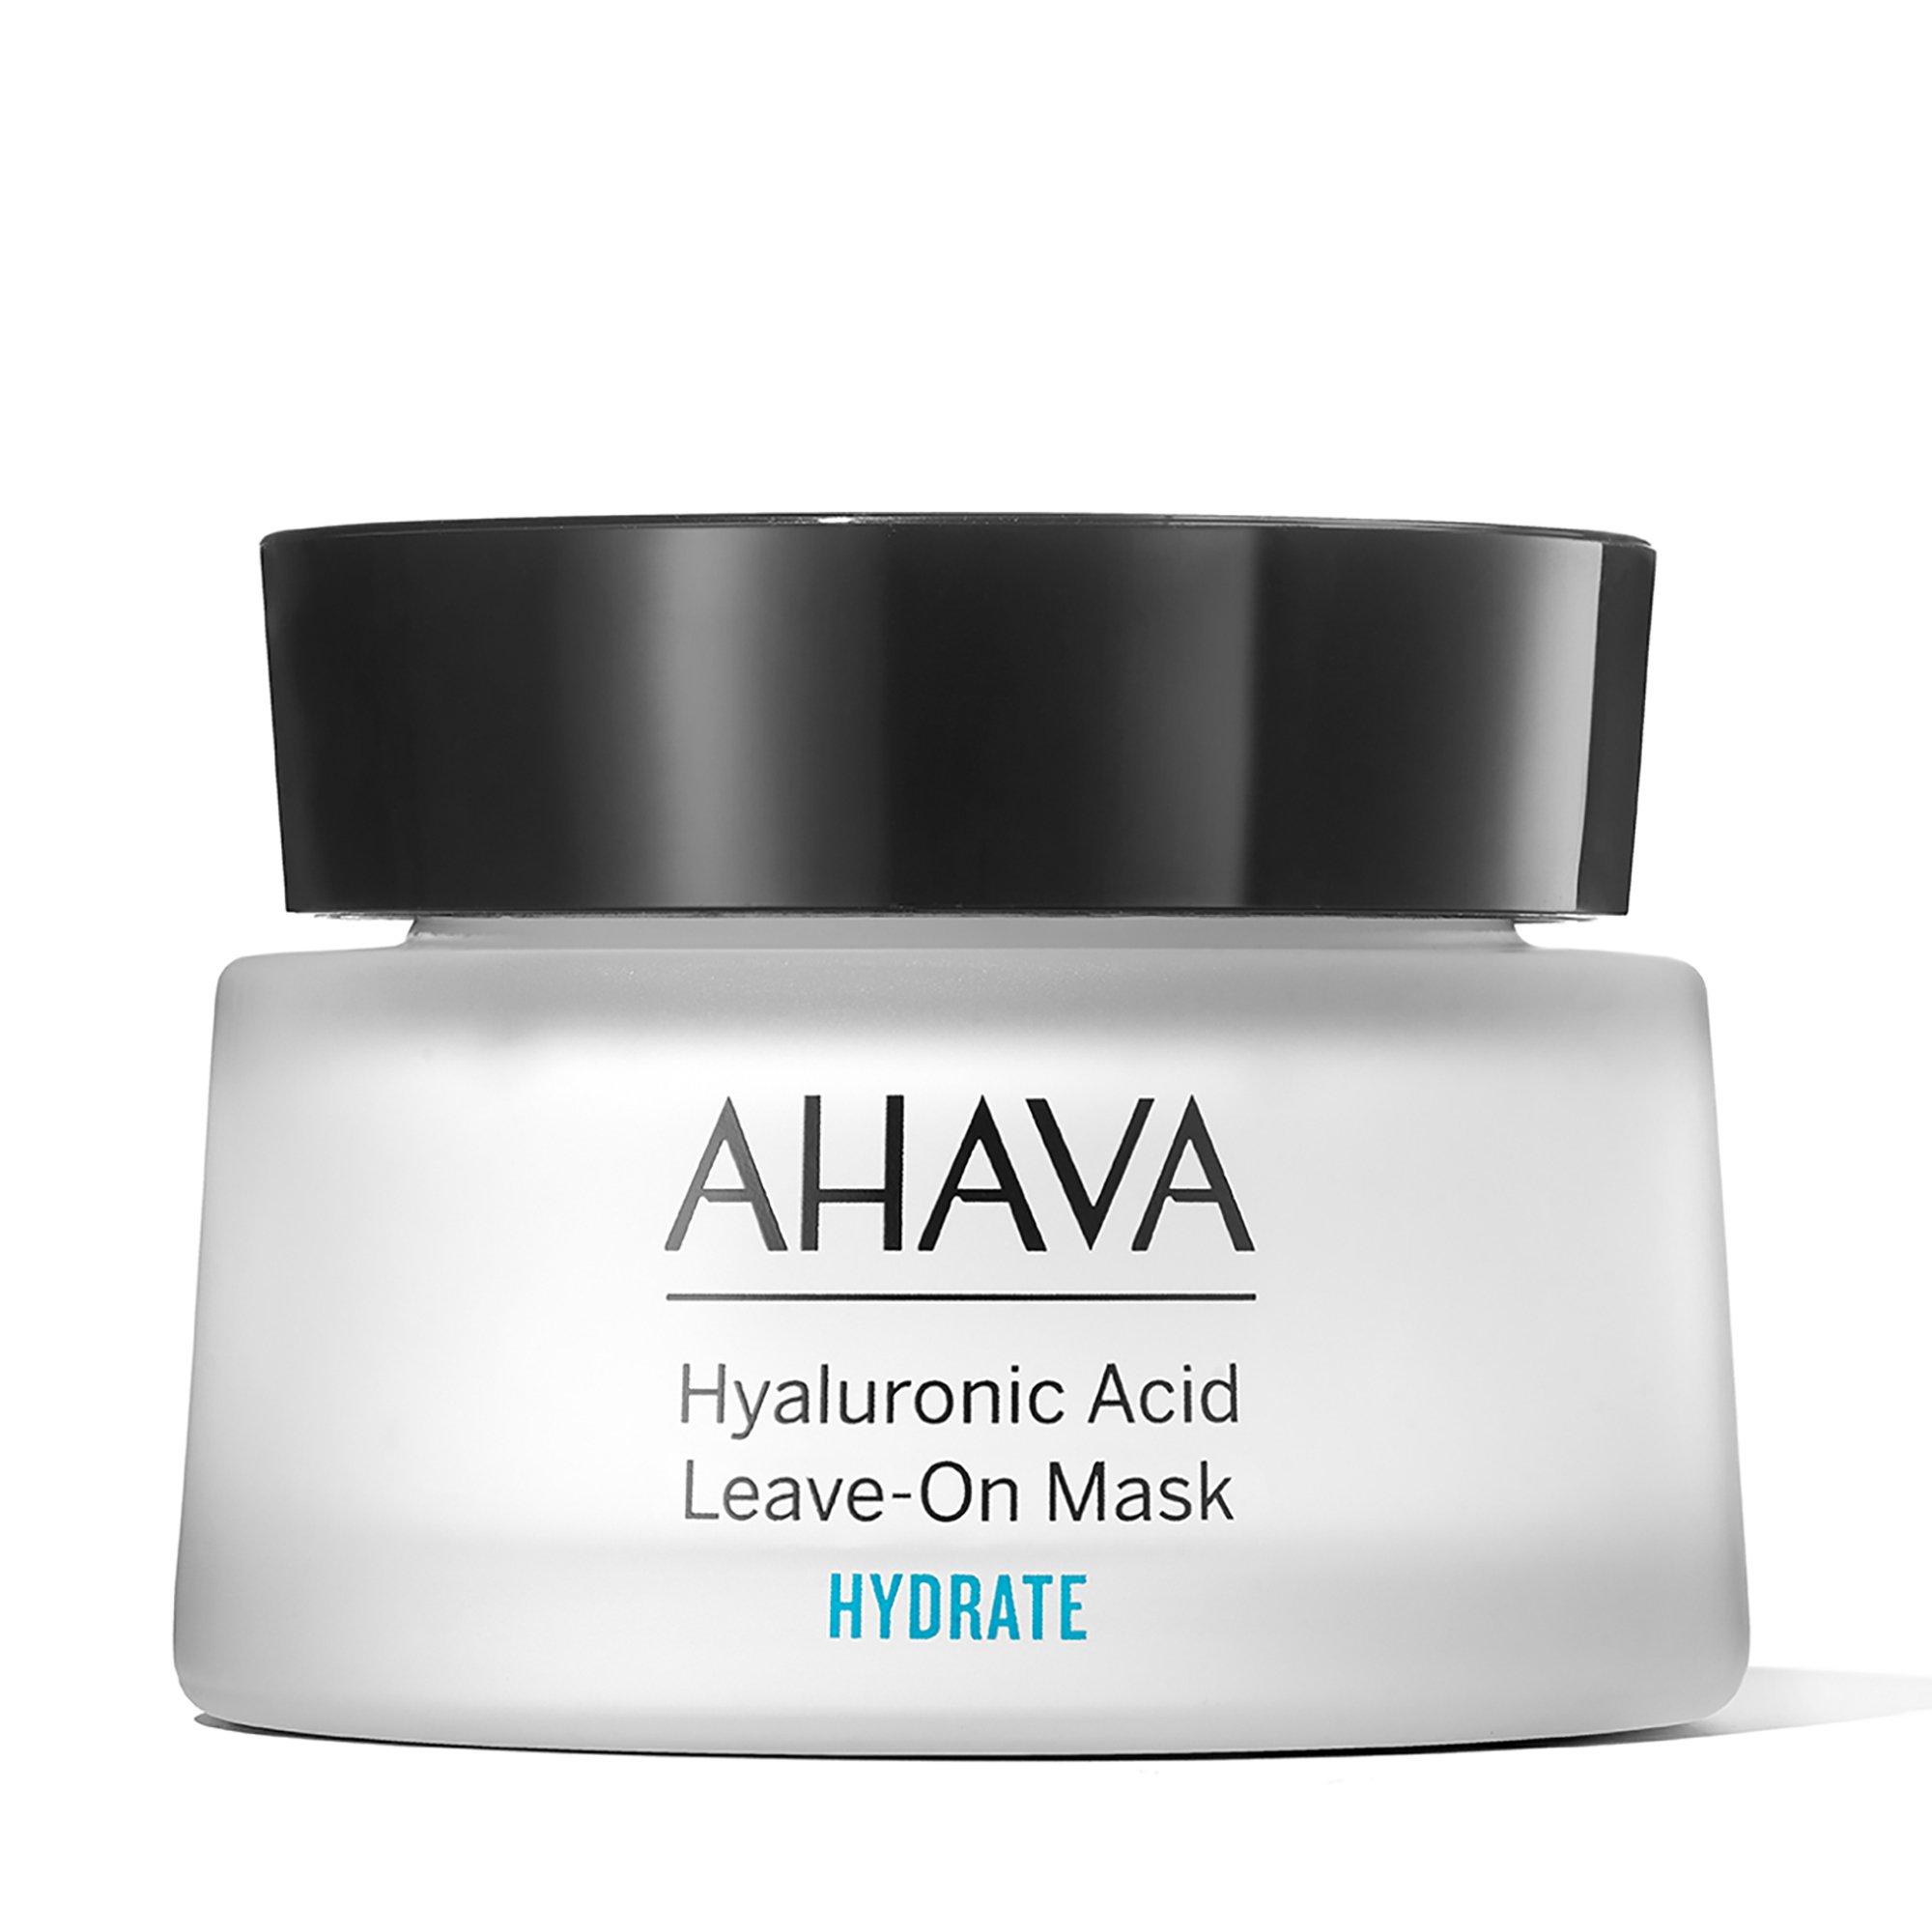 Image of AHAVA Hyaluronic Acid Leave-On Mask - 50ml